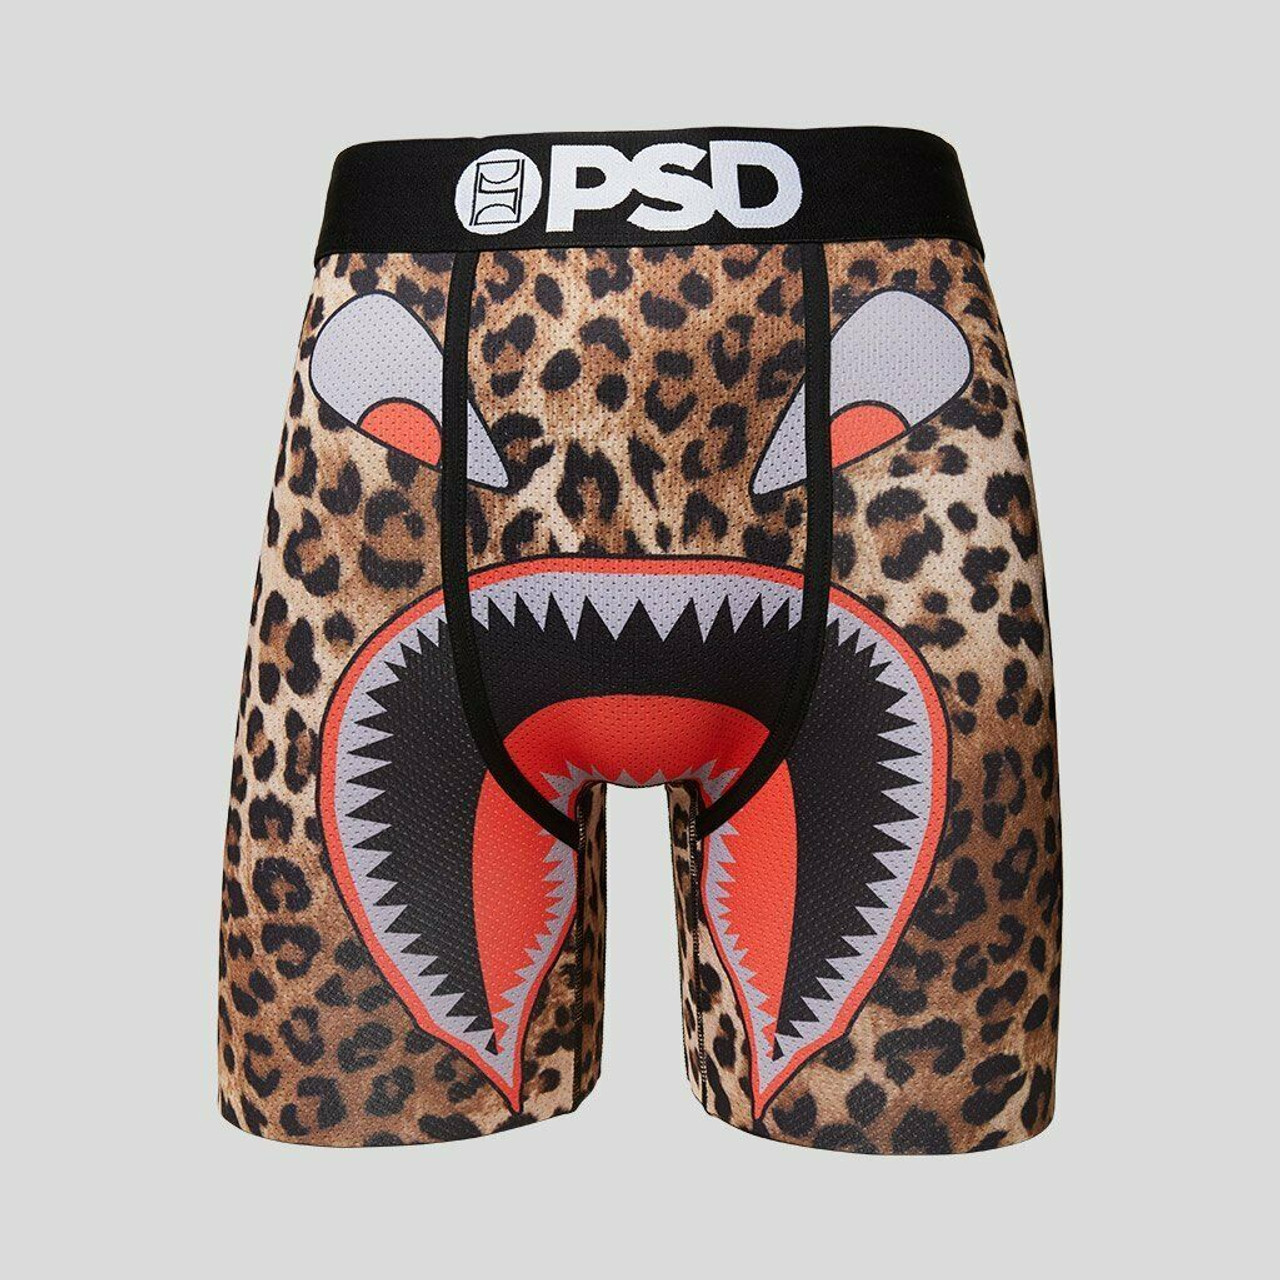 PSD Cheetah Print Warface Animal Urban Athletic Boxers Briefs